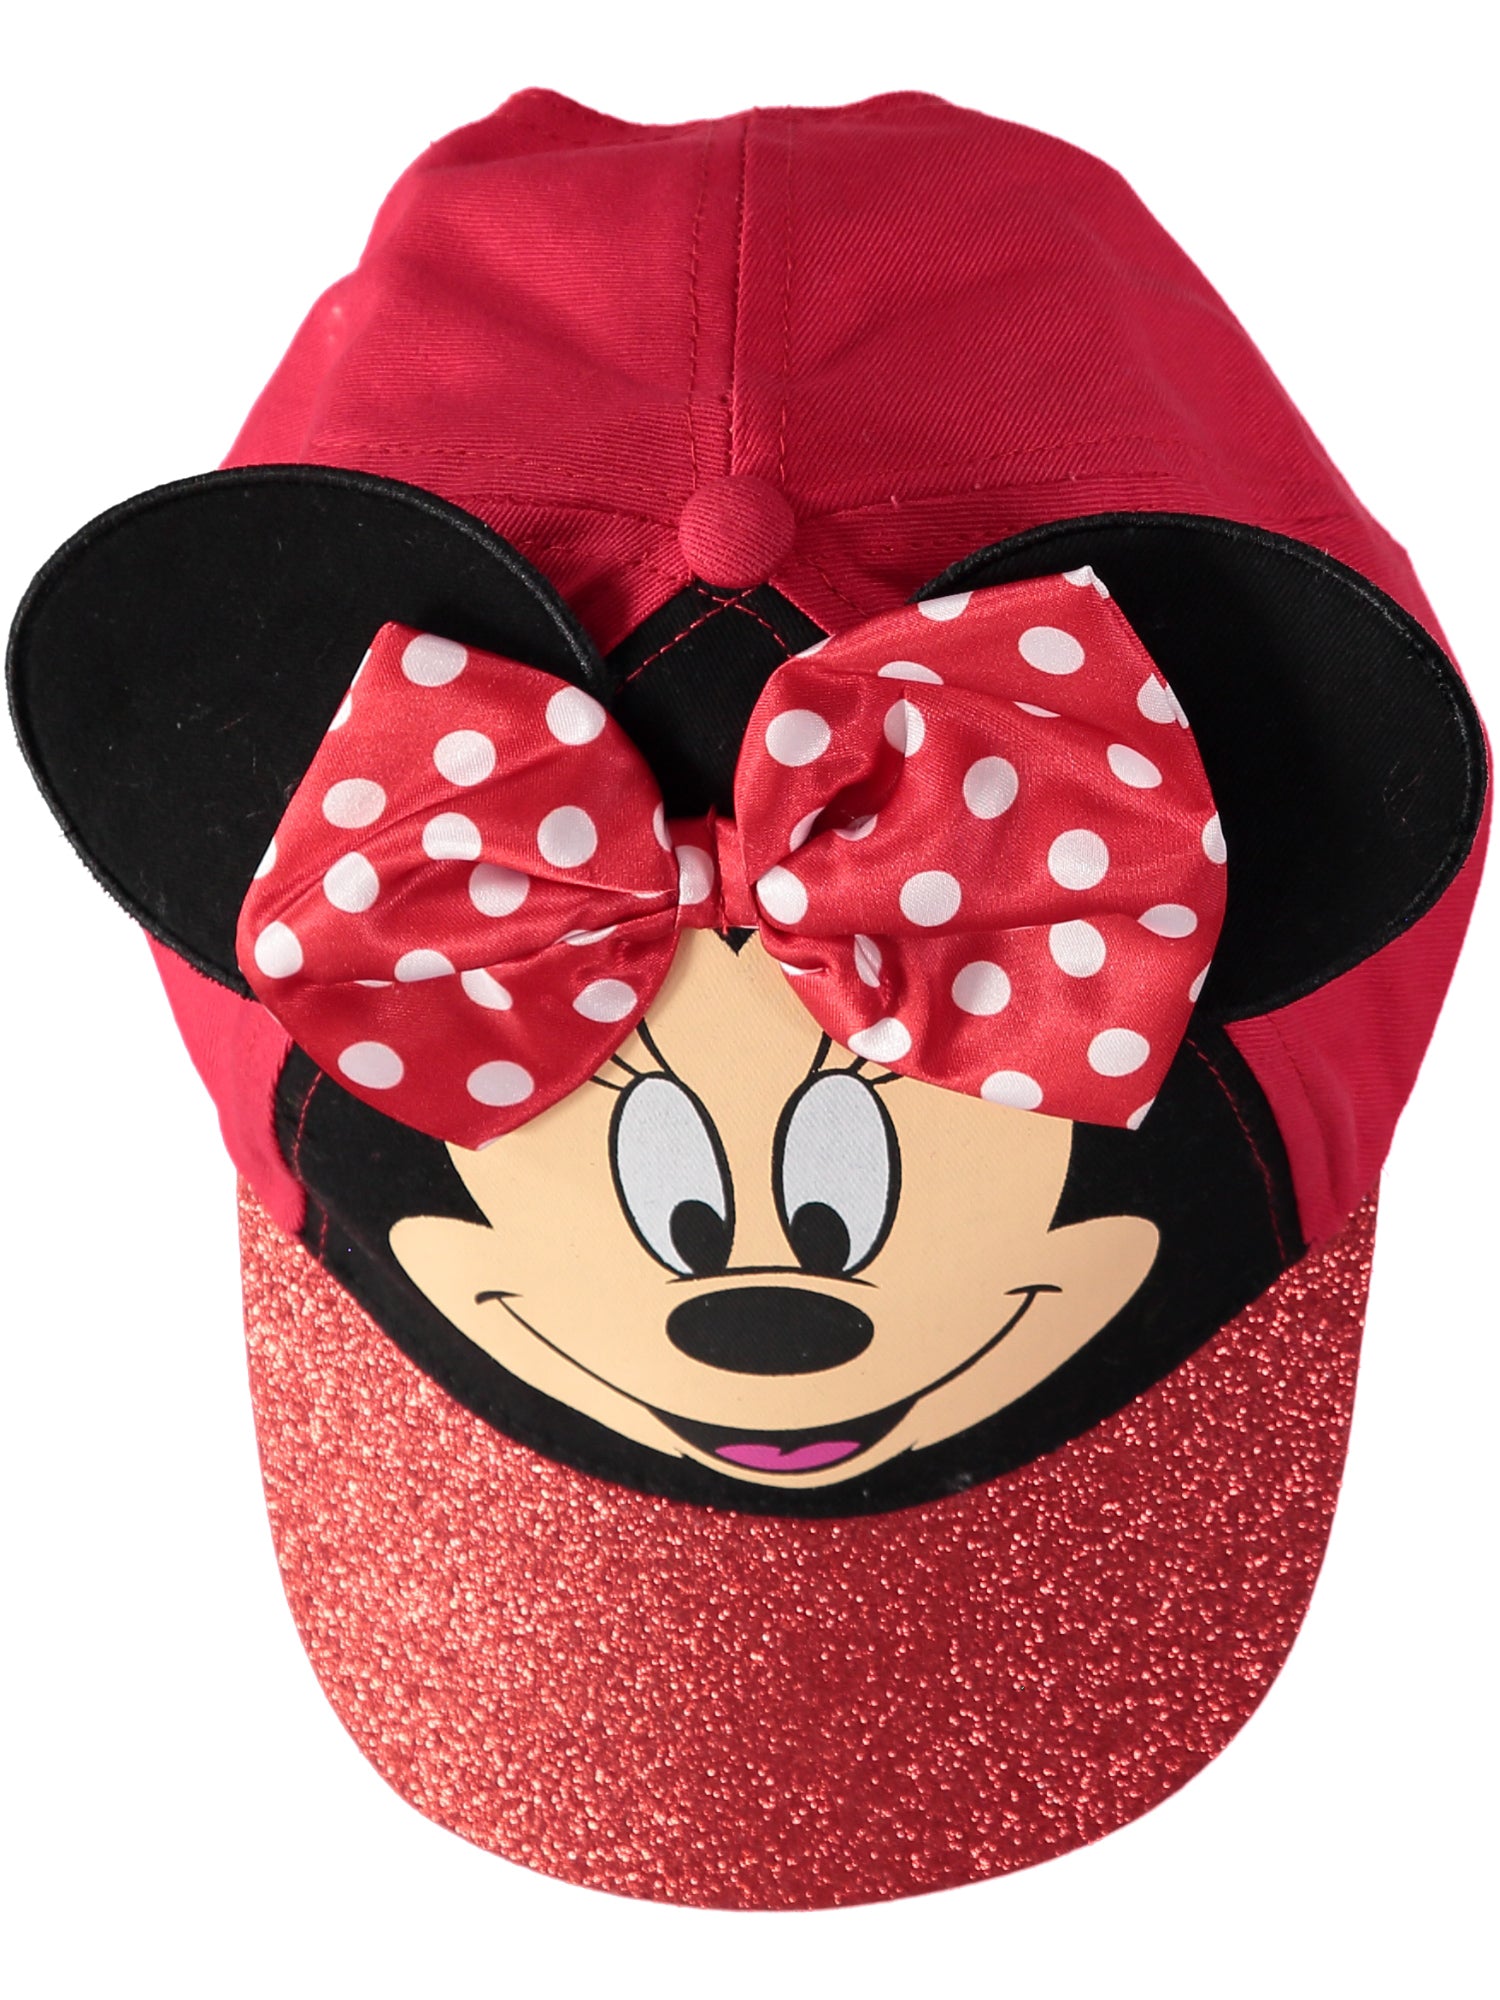 Disney Minnie Mouse Baseball Cap with 3D Ears, Bow & Glitter Rim